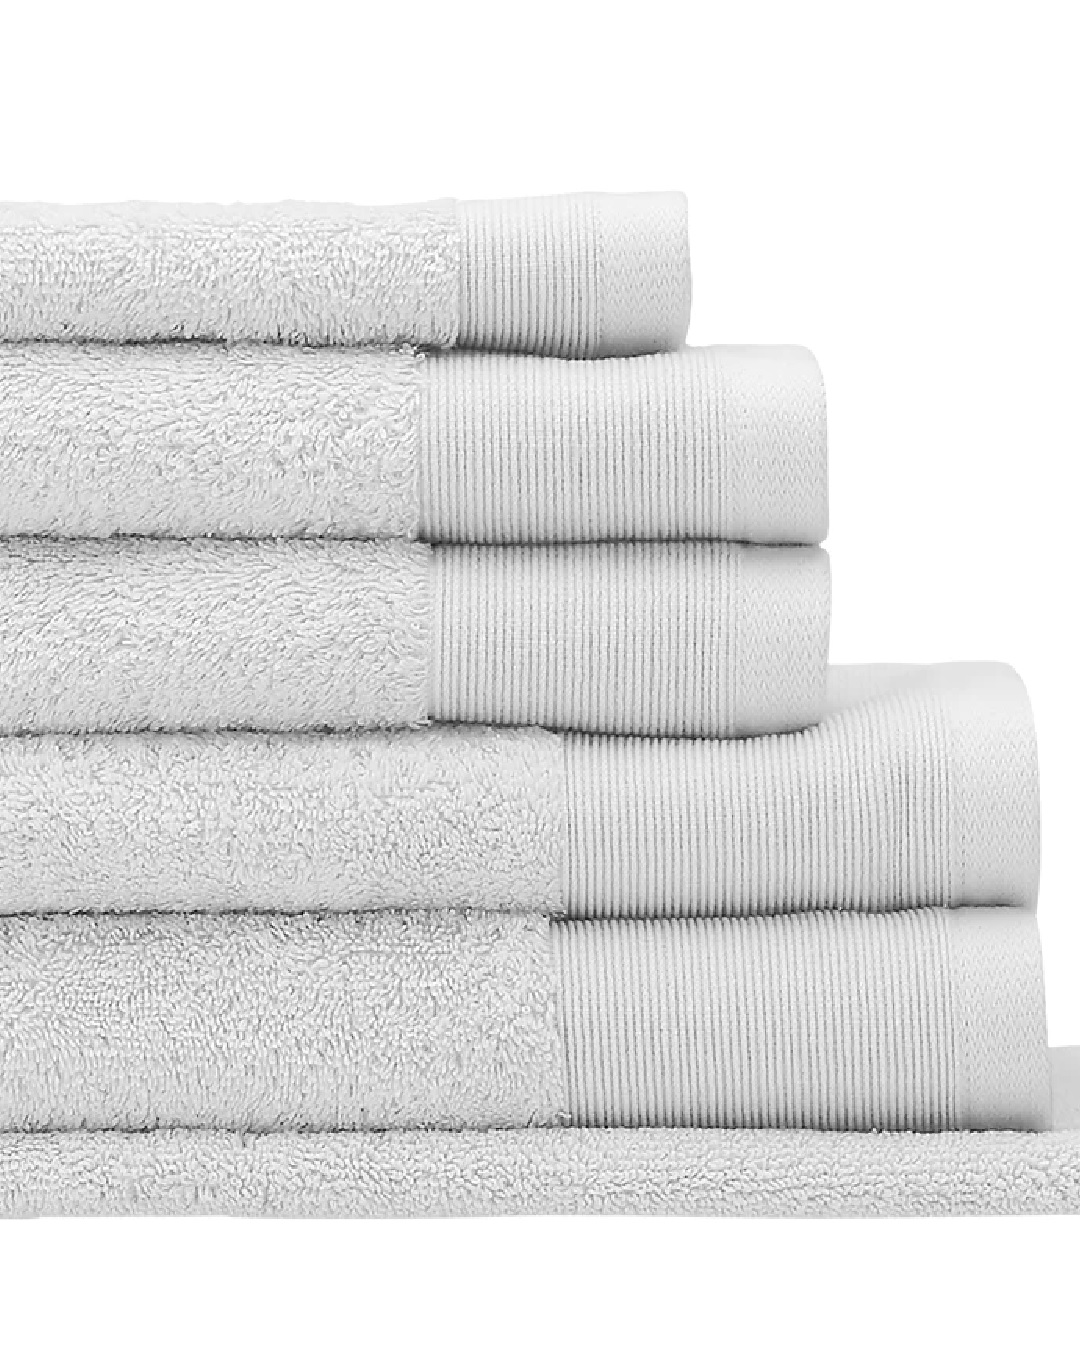 Vida organic white bathroom towels